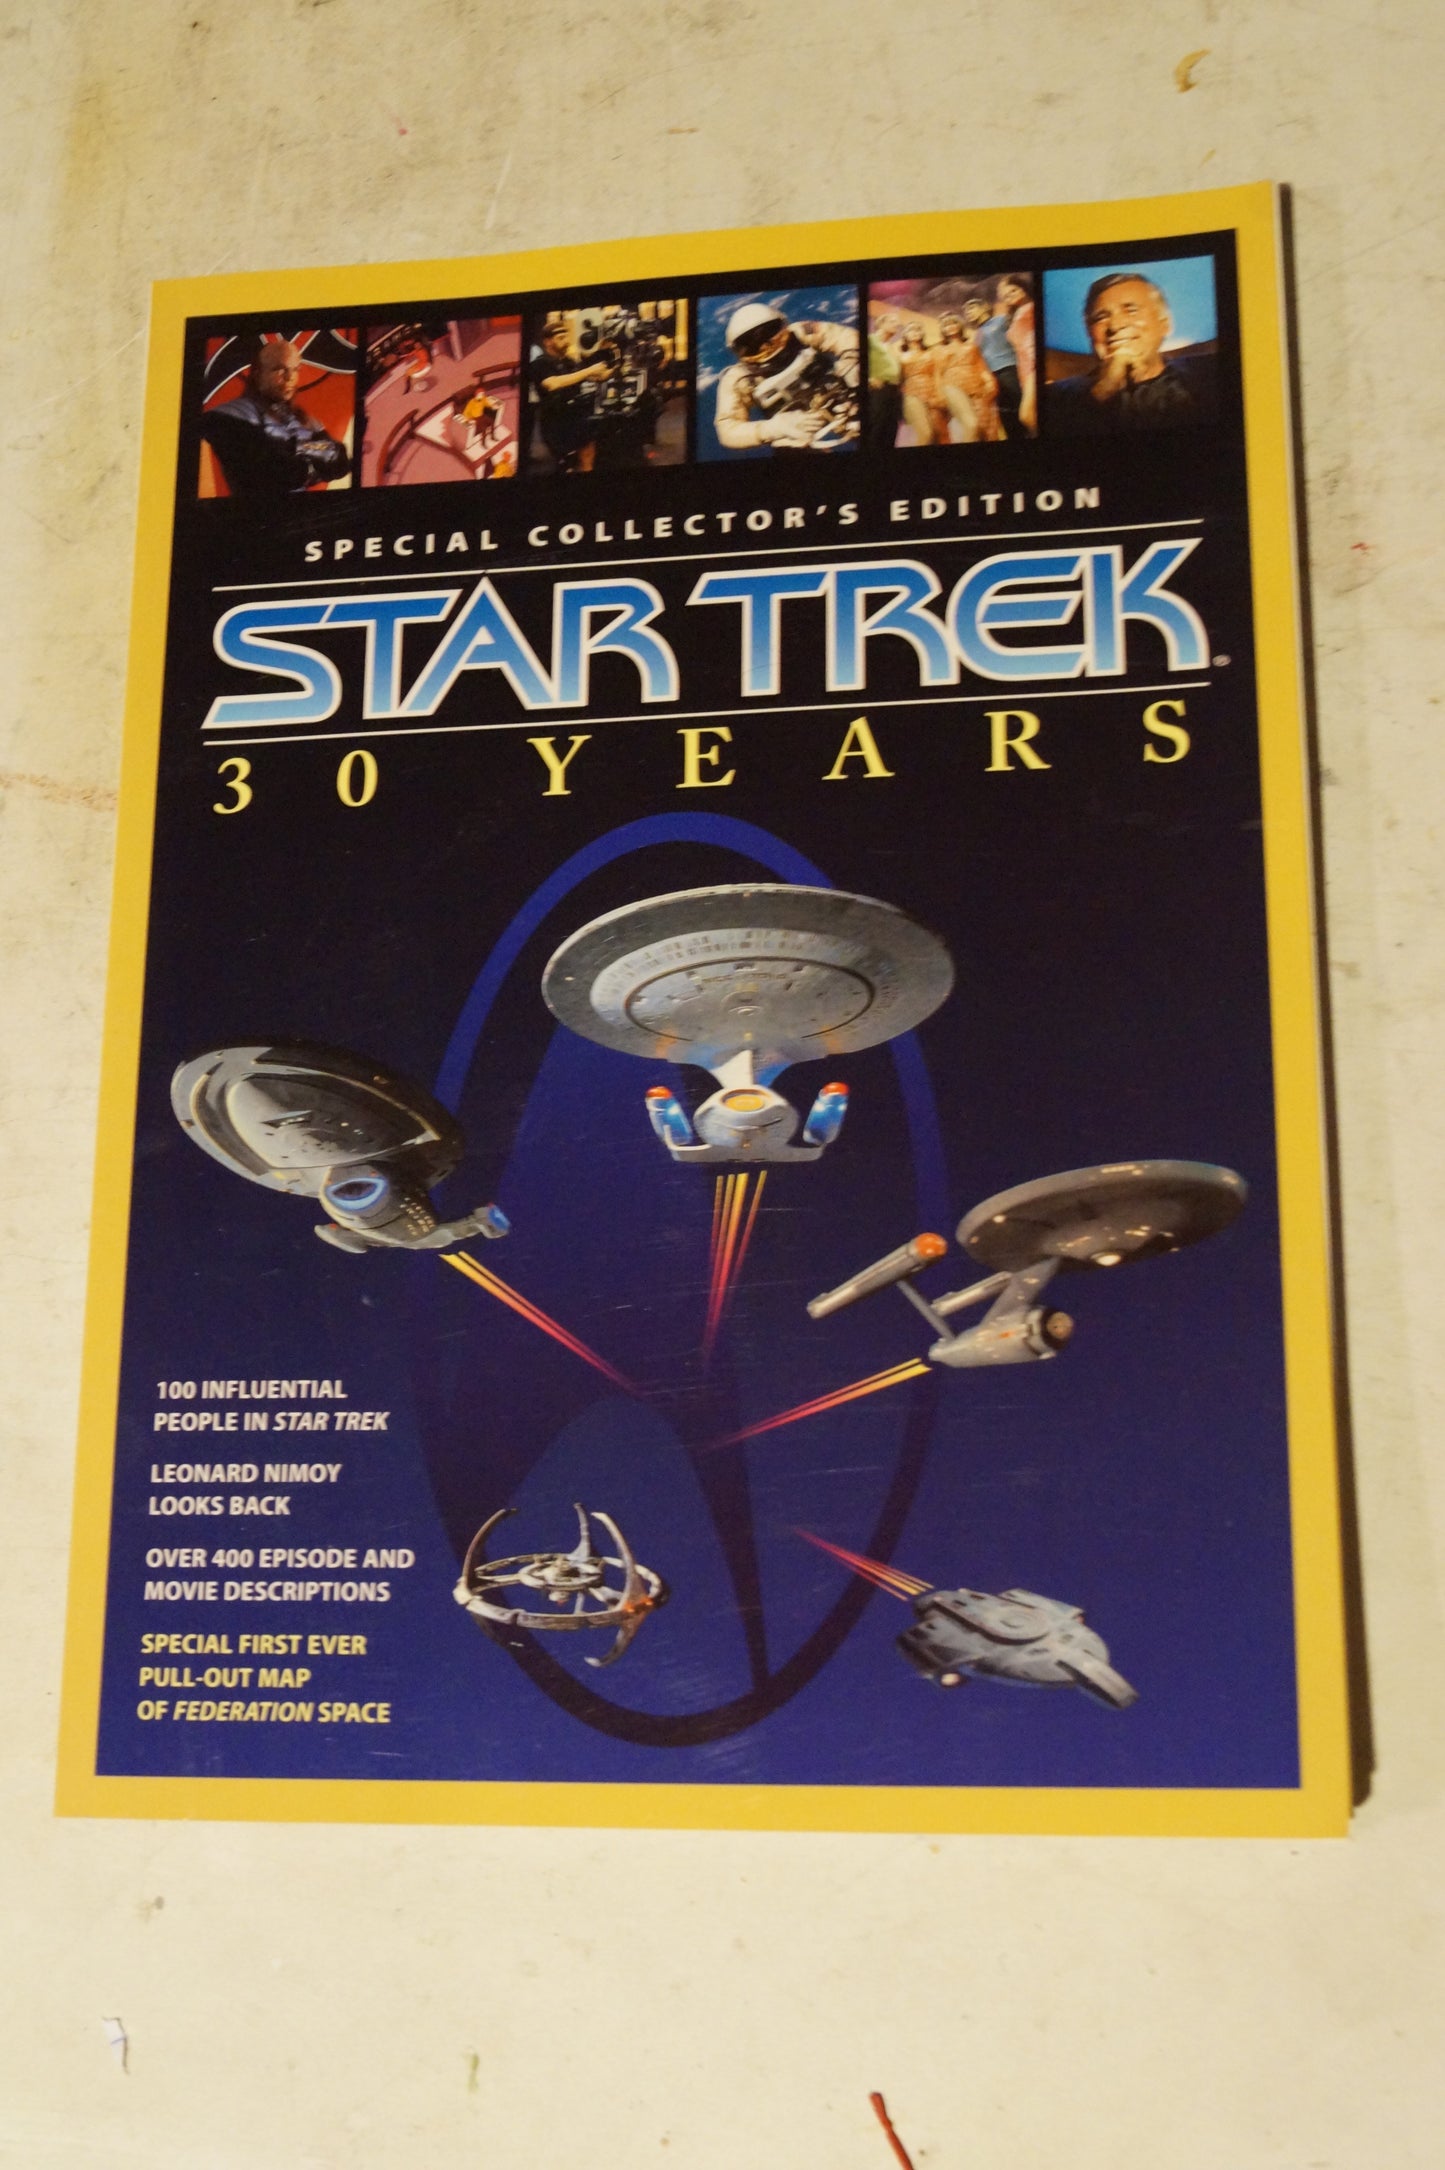 Special Collectors Edition Star Trek 30 years